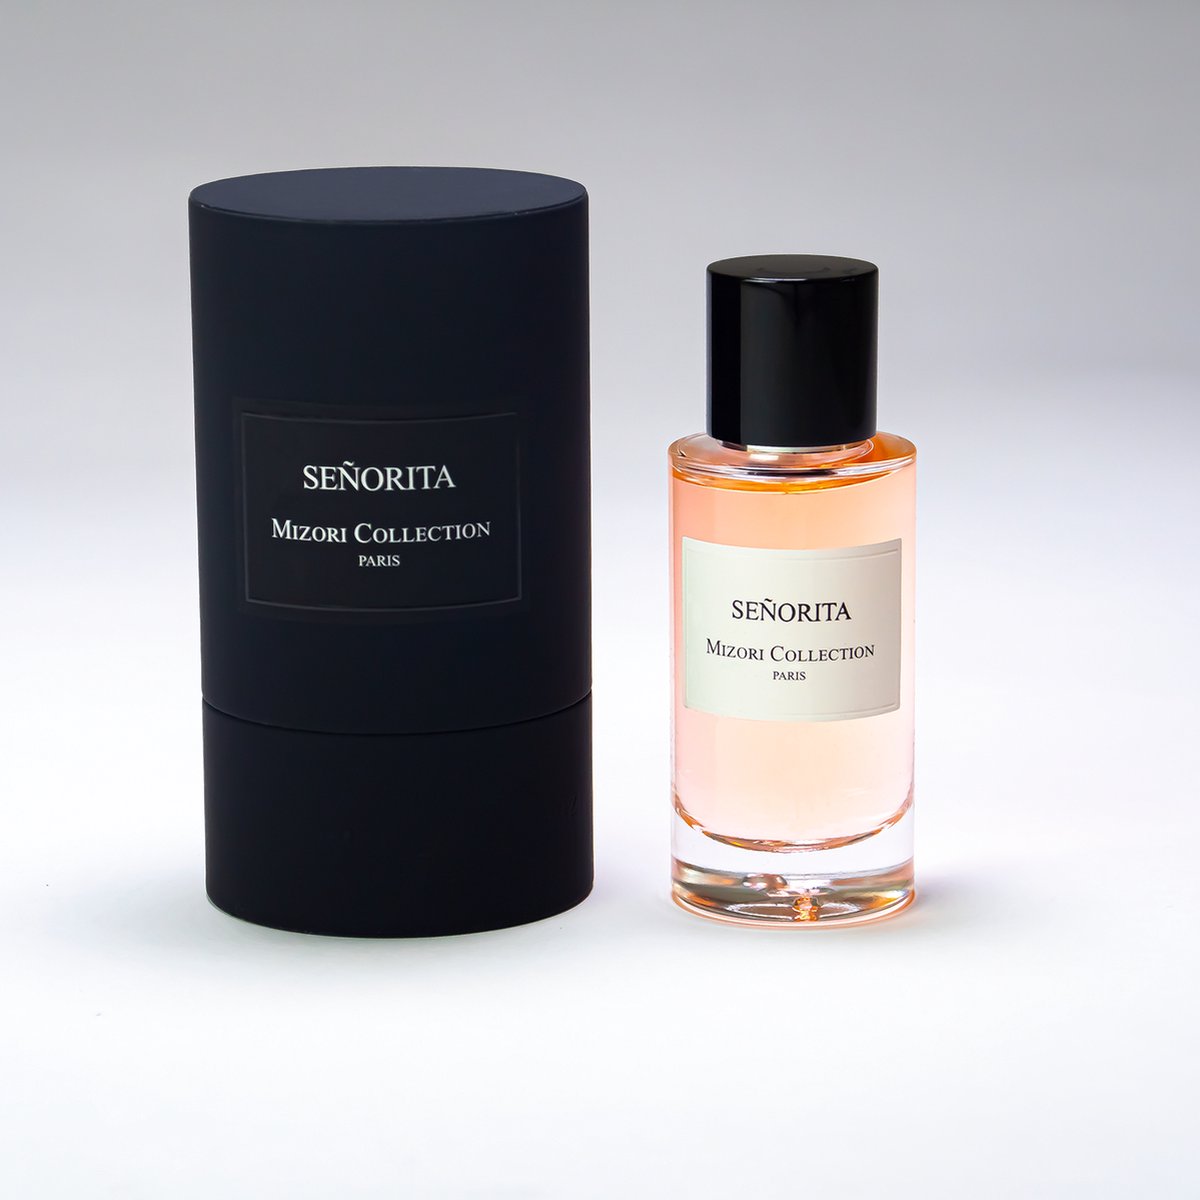 Señorita - Mizori Collection Paris - High Exclusive Perfume - Eau de Parfum - 50 ml